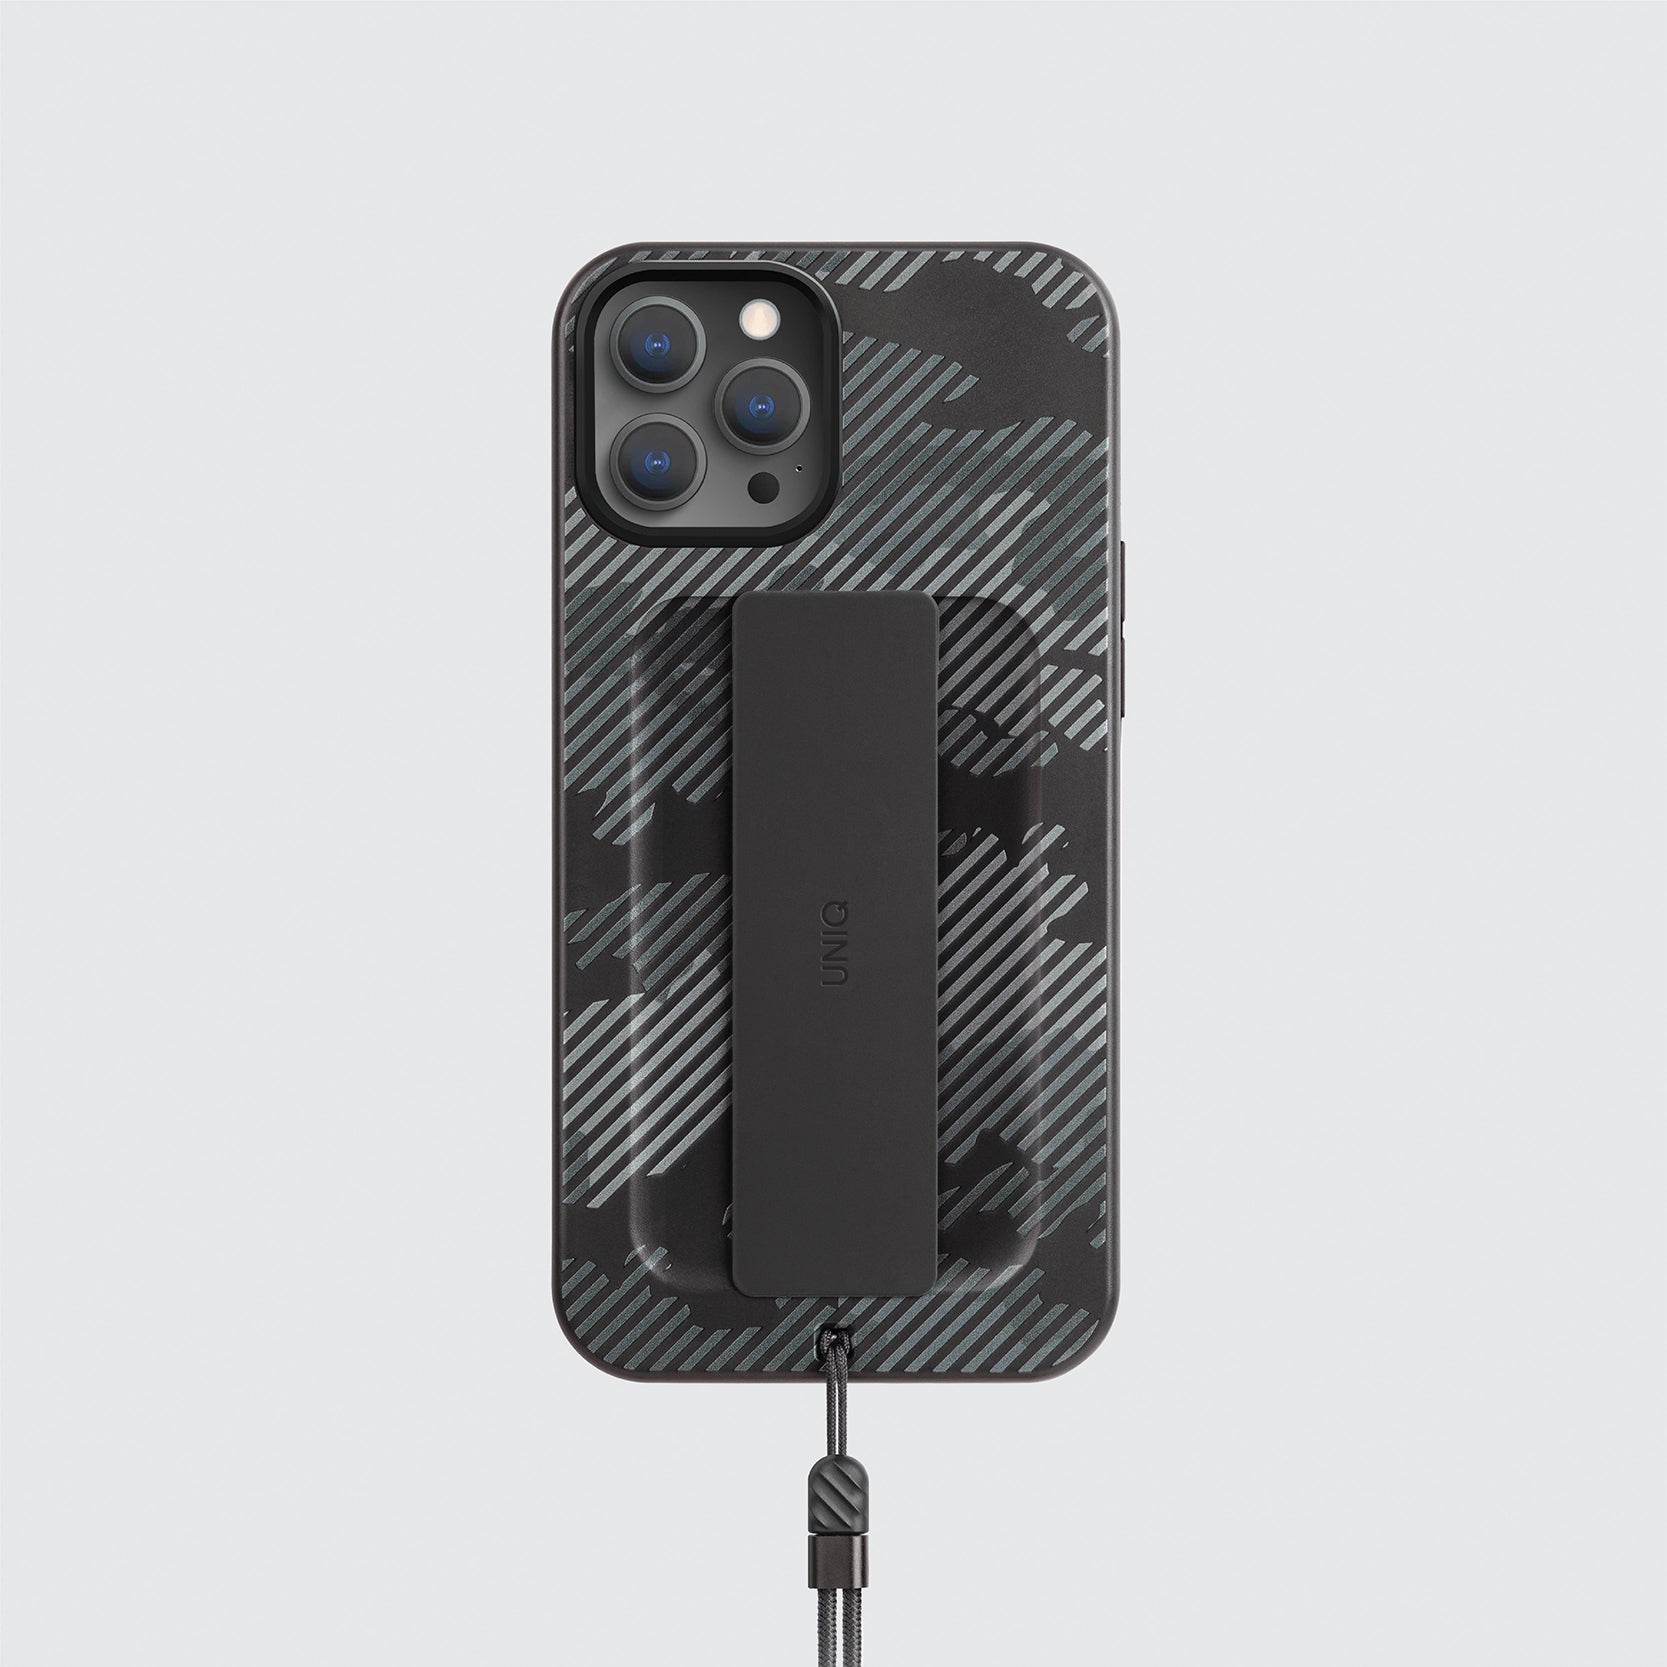 Uniq Iphone 12 Pro Max Hybrid Heldro Designer Edition Case / Cover - Charcoal Camo  - كفر حماية مع قبضه من شركة يونيك